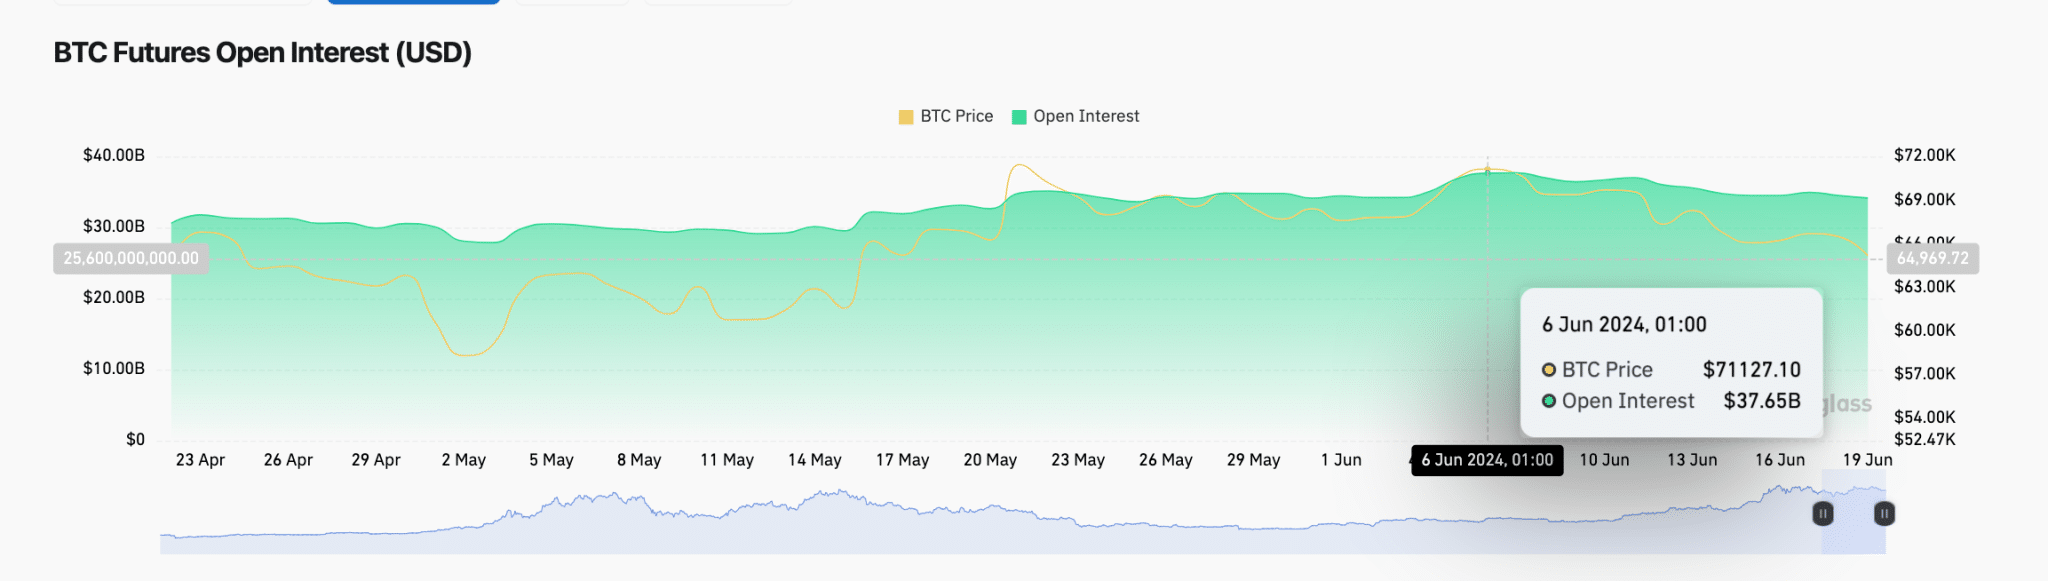 Bitcoin Open Interest vs. BTC Price | Coinglass